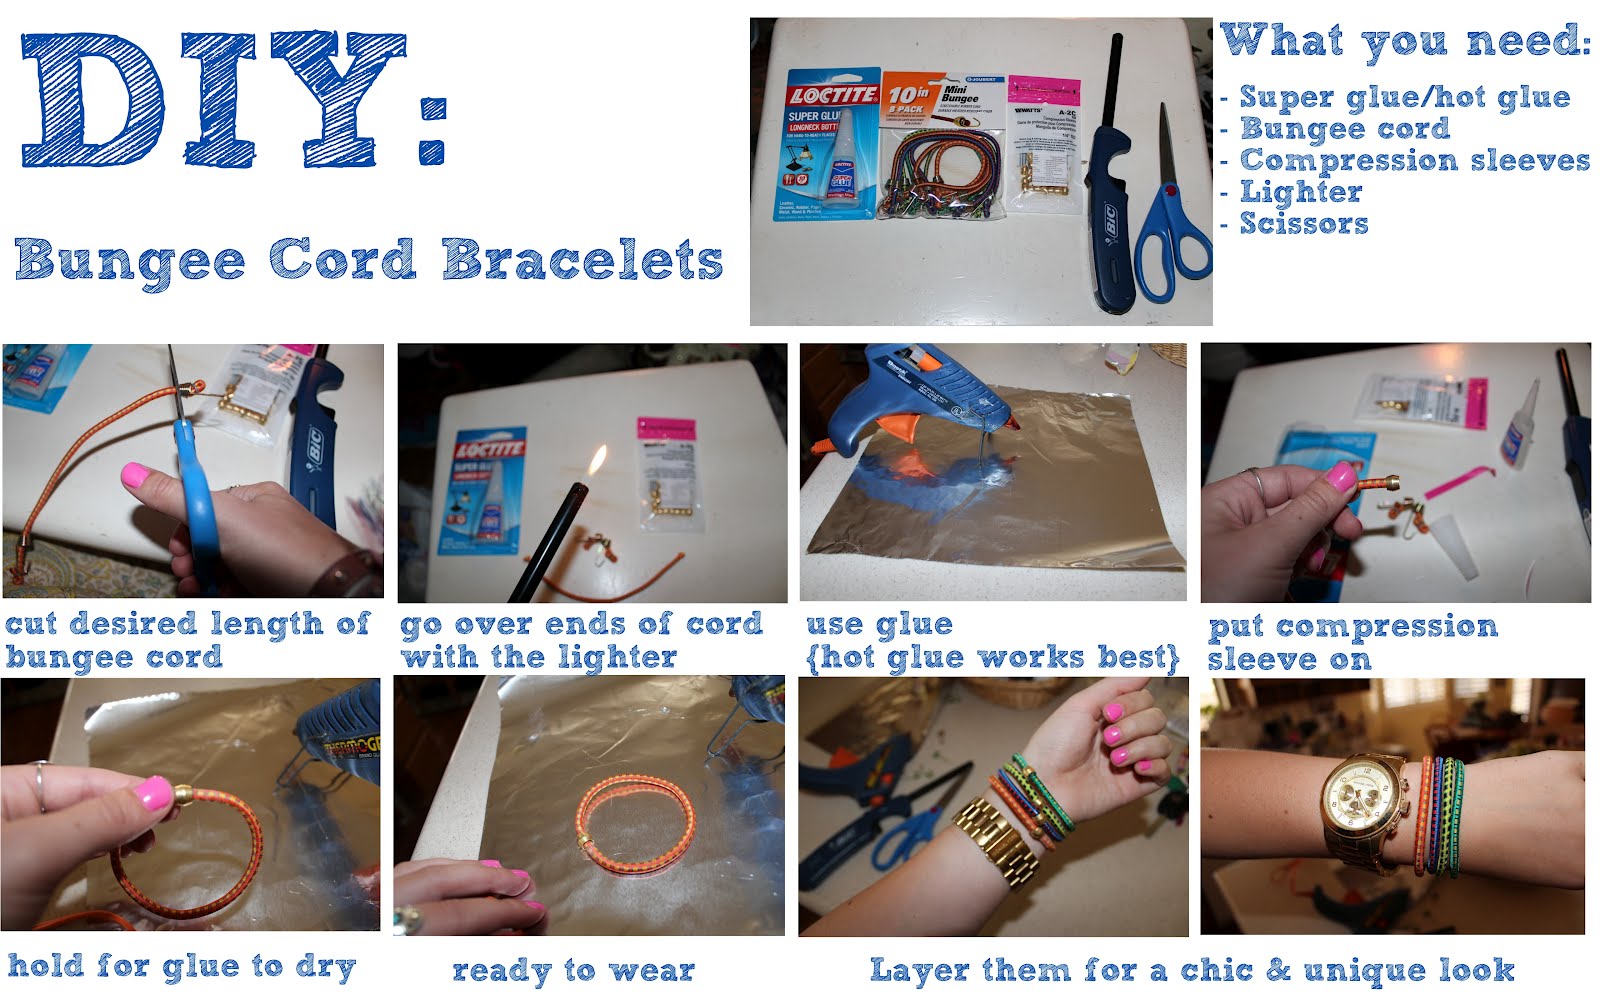 DIY 3 The SIMPLEST Single Strand Friendship Bracelets You Can Make - YouTube